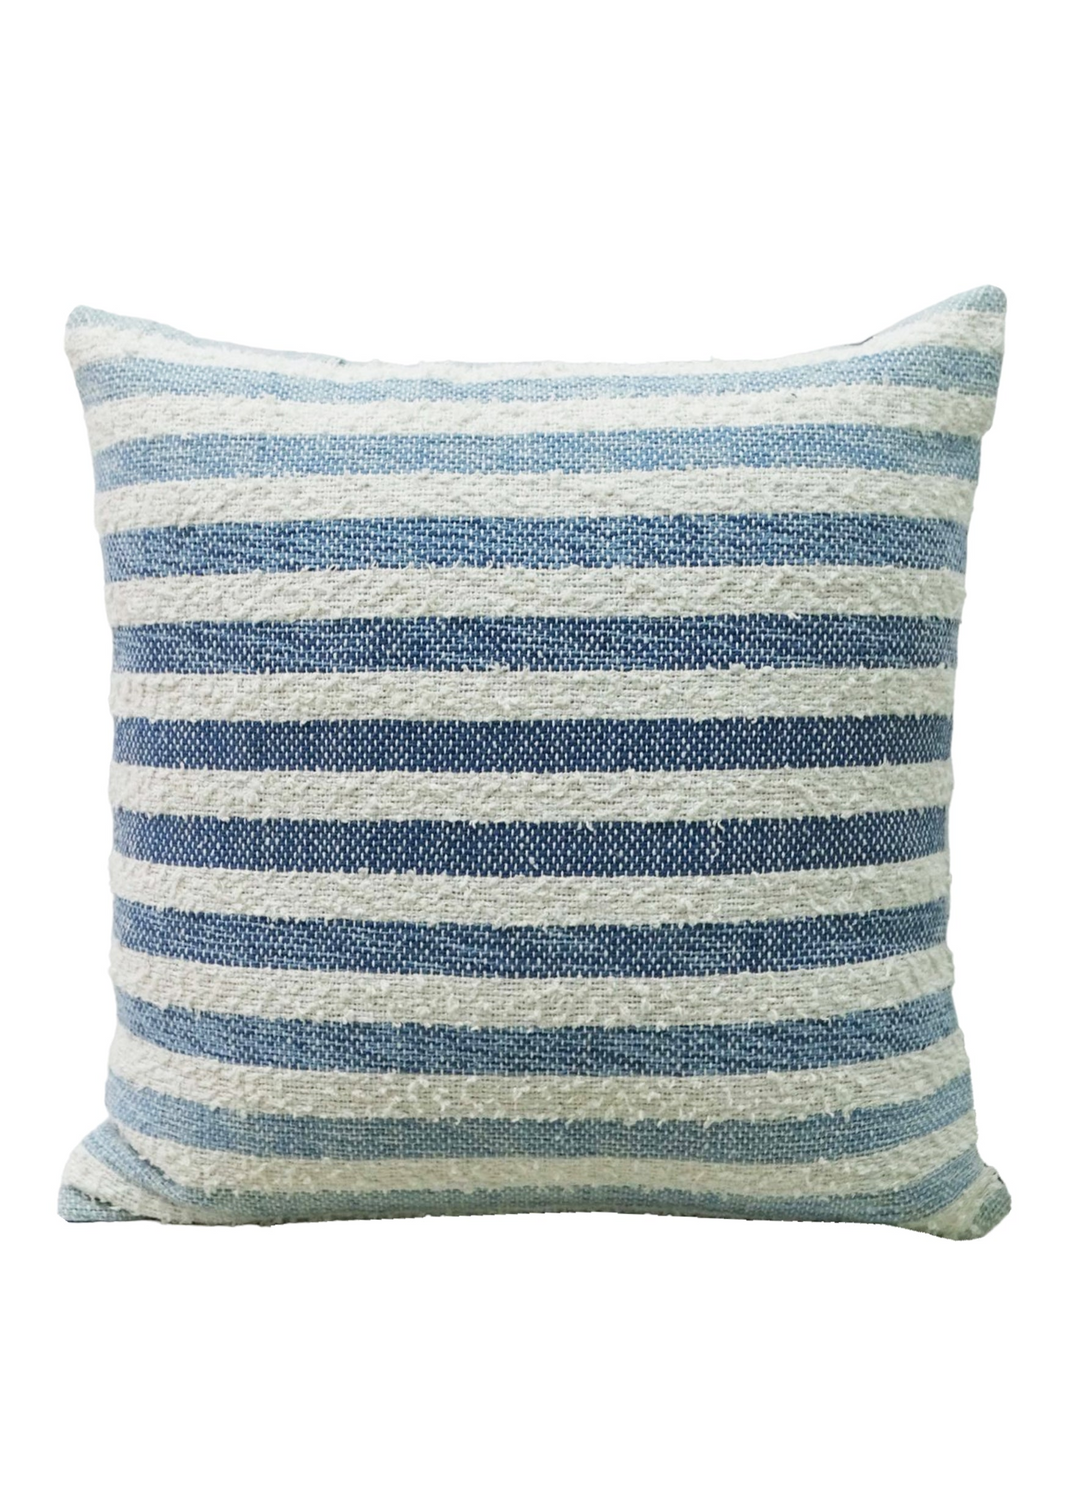 Boho Aesthetic Linden Street 100% Cotton Ombre Textured Stripe Pillow | Biophilic Design Airbnb Decor Furniture 